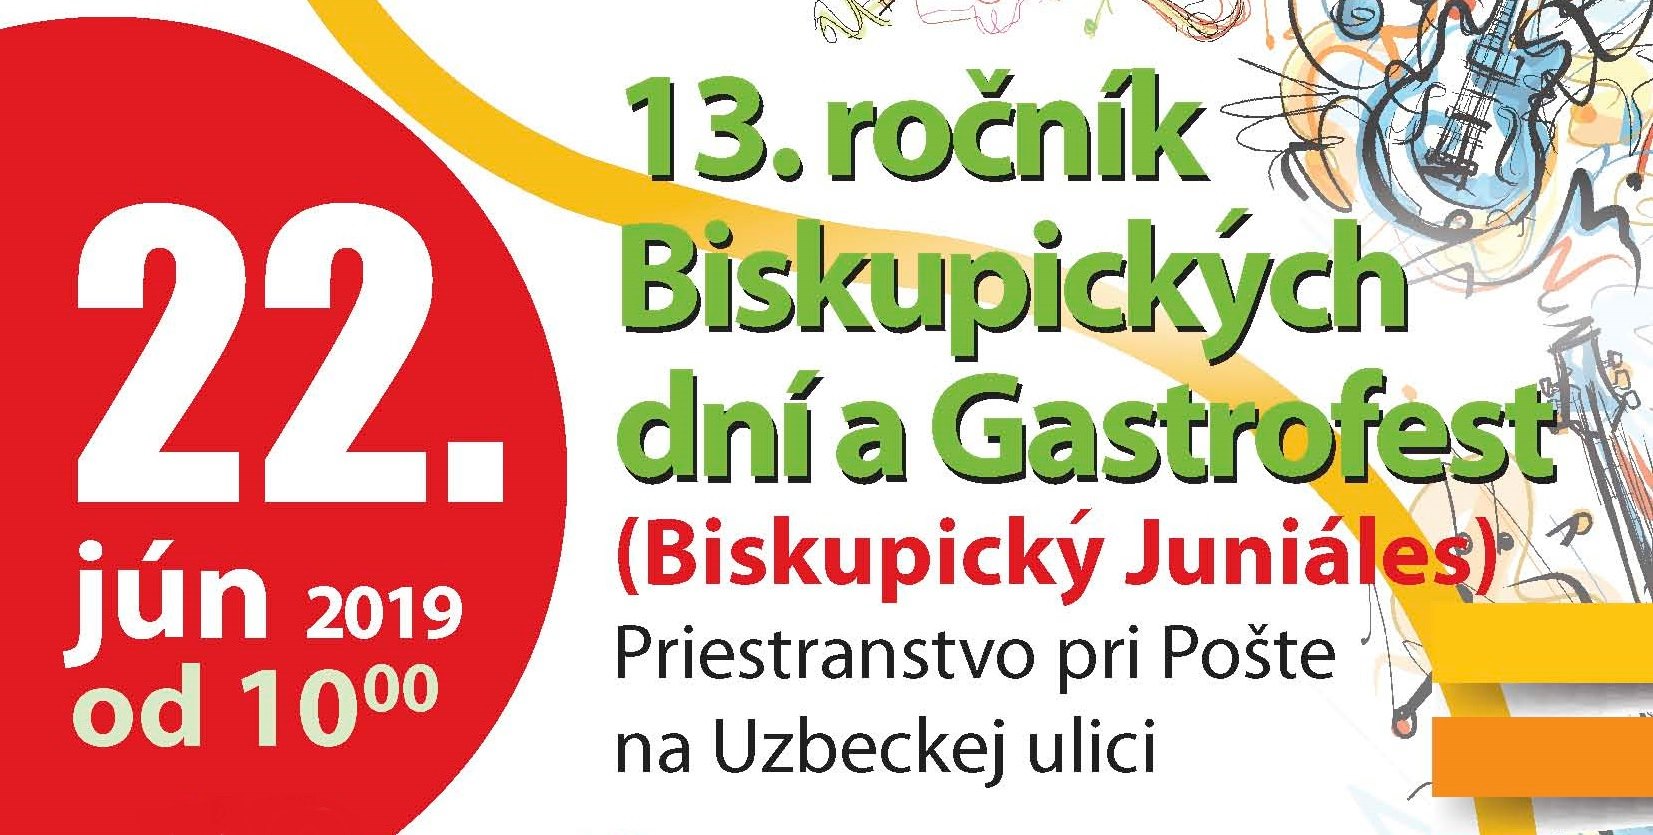 Biskupick dni a Gastrofest 2019 Podunajsk Biskupice - 13. ronk